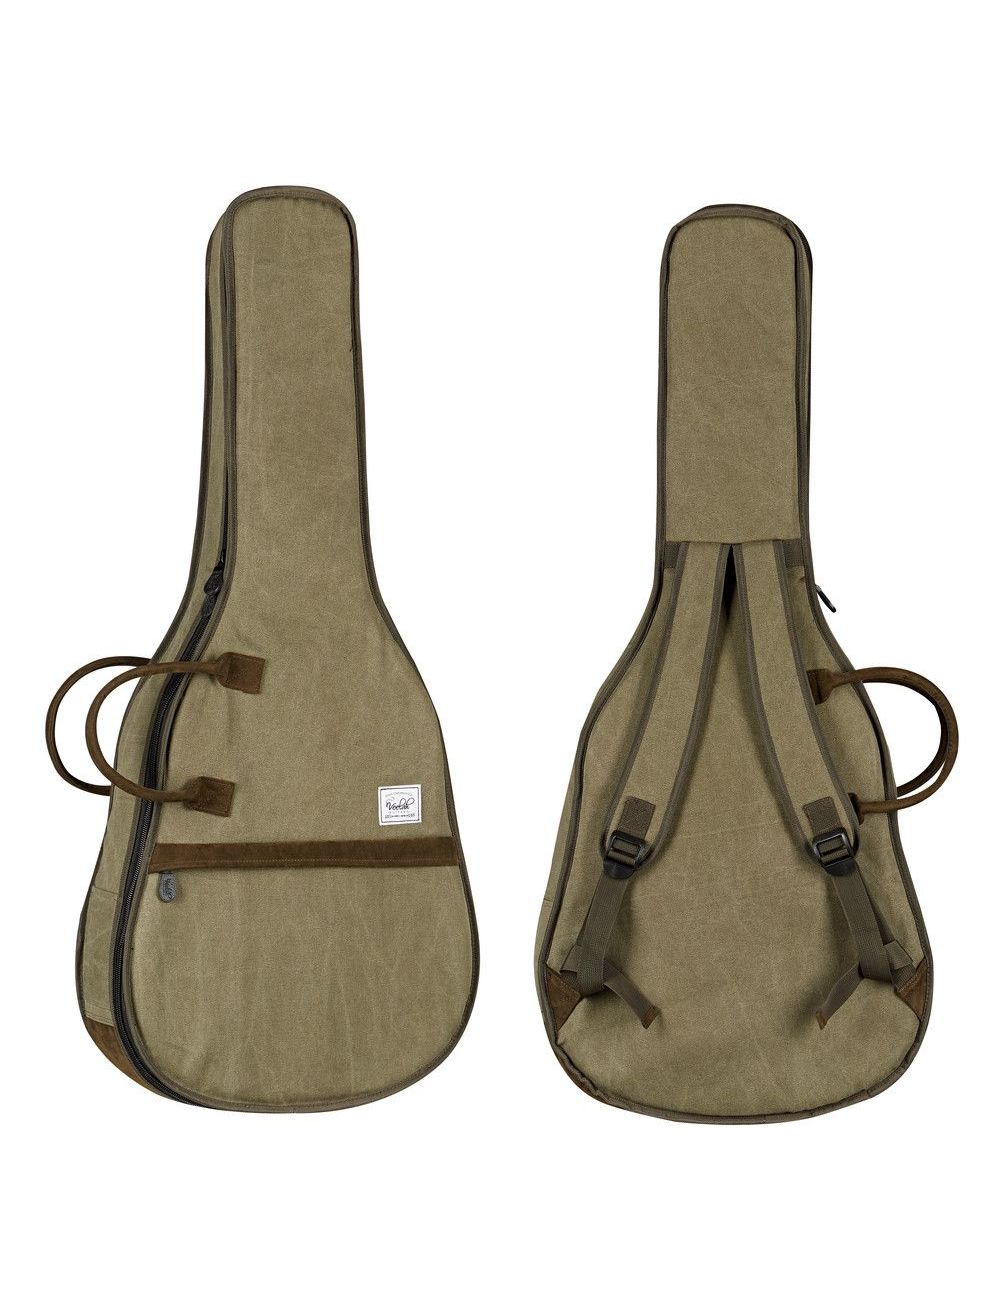 Veelah Navy CGB15-NA Classical guitar gig bag 1502452 Classical and flamenco